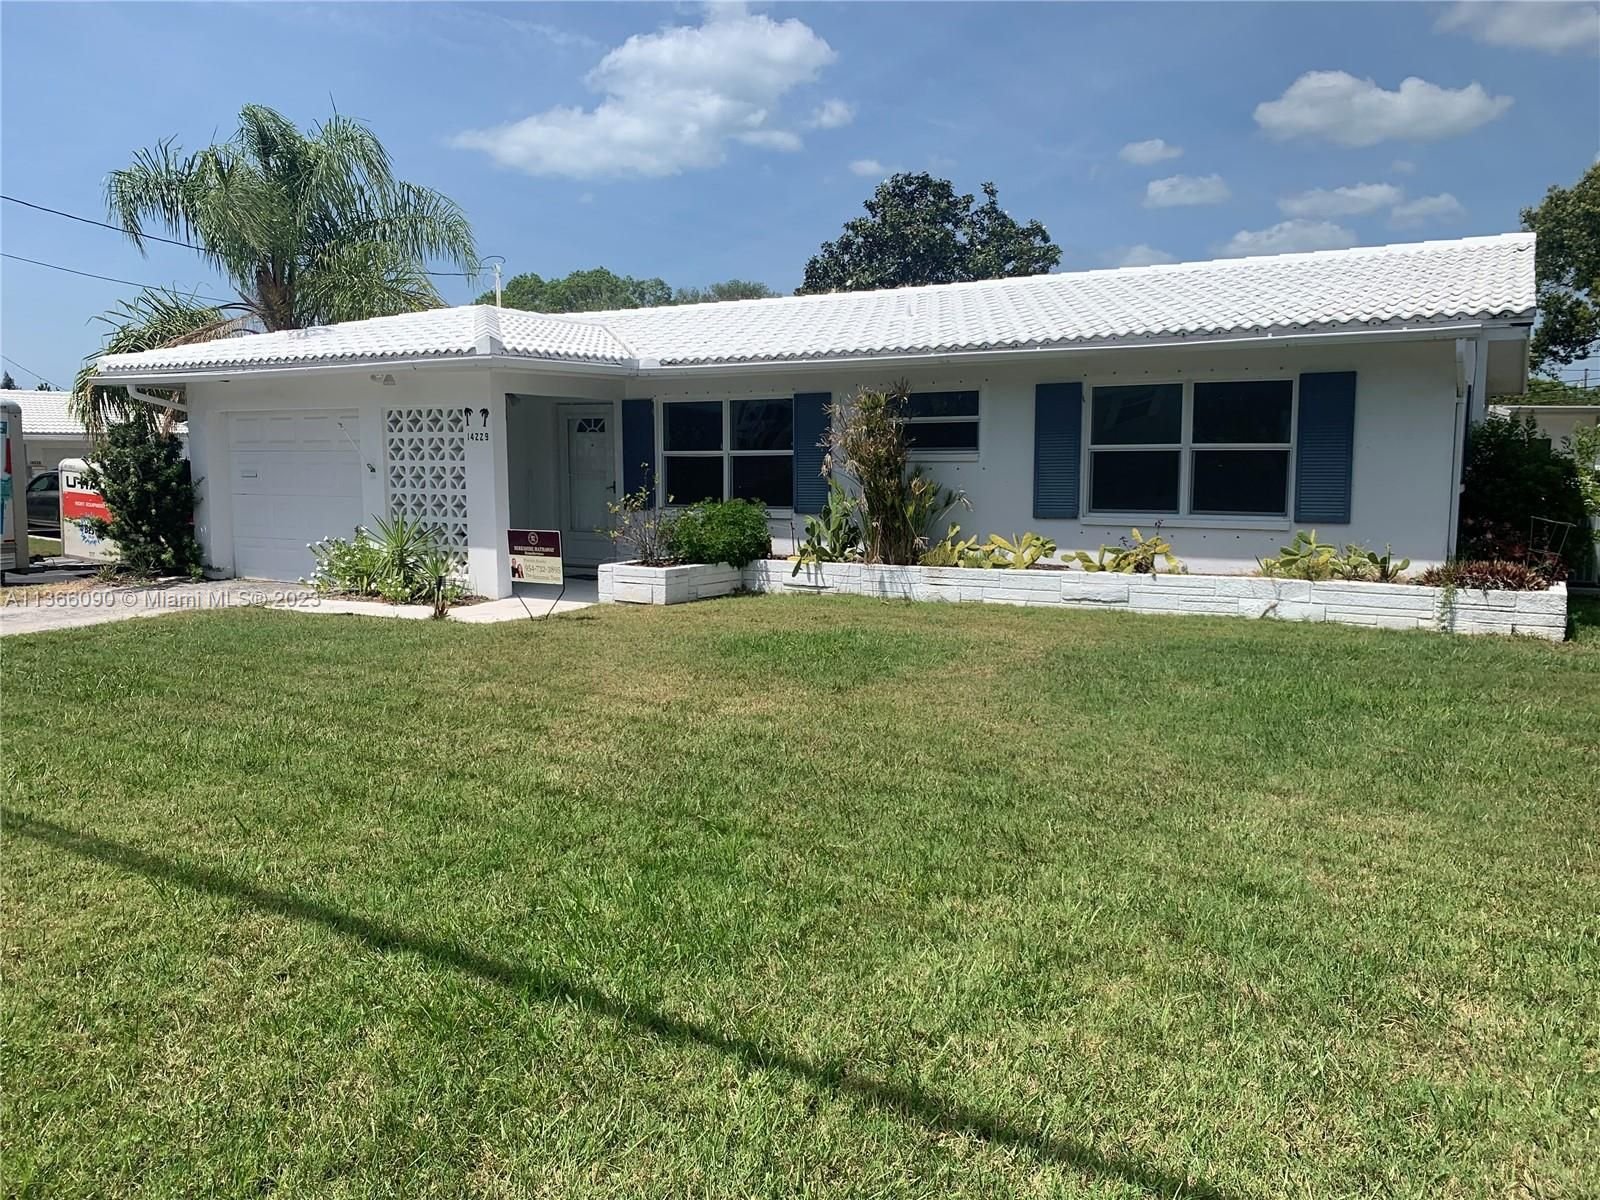 Real estate property located at 14229 86th Av, Pinellas County, Seminole, FL